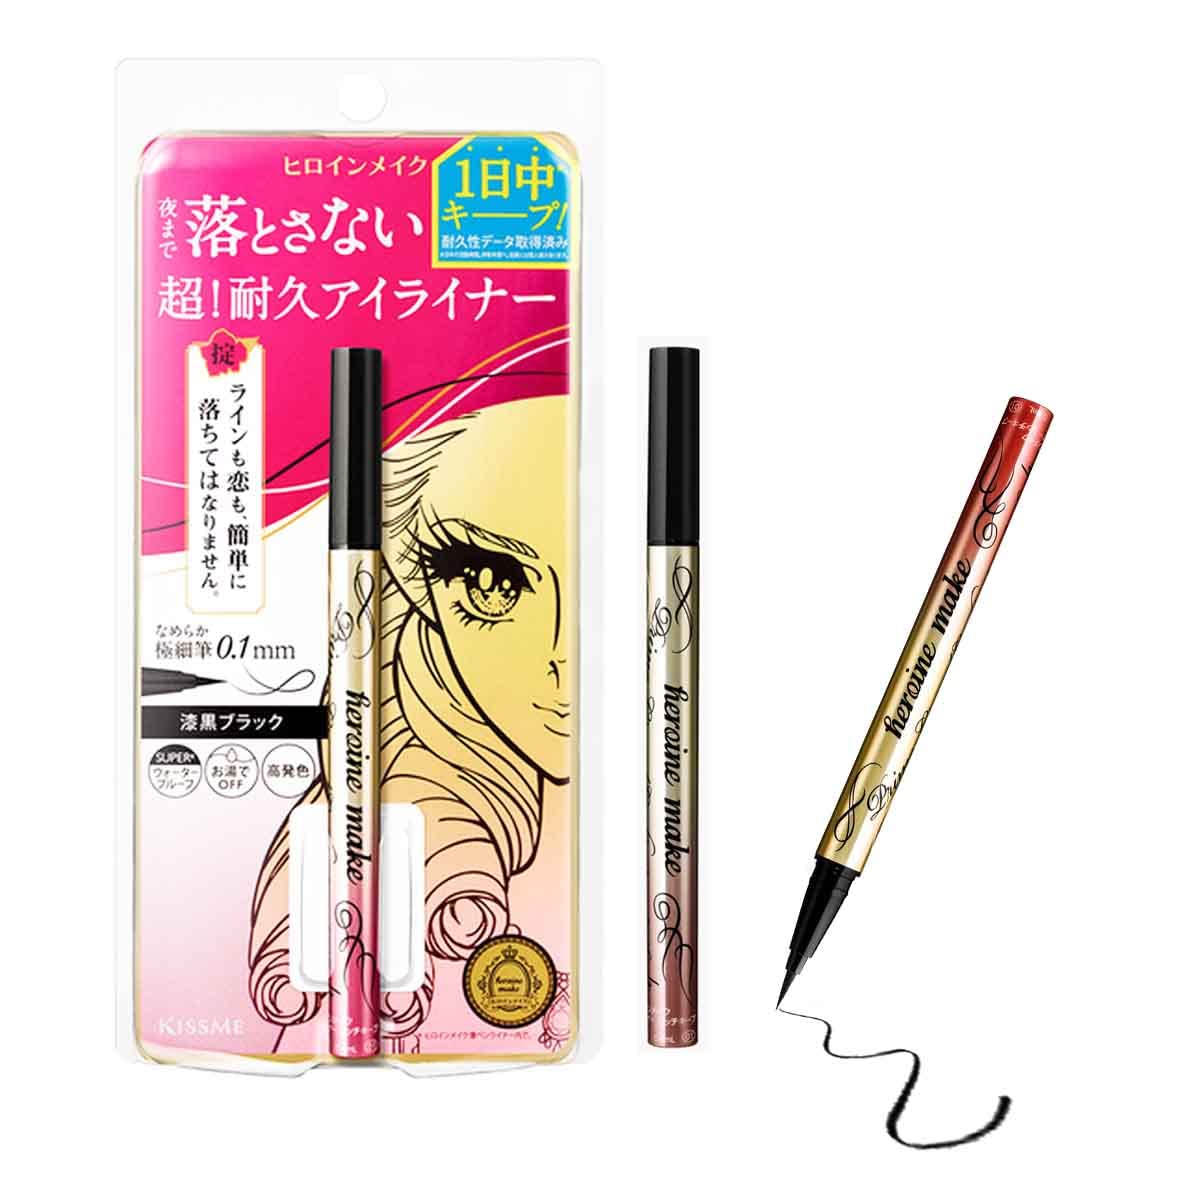 Shiseido Majolica Majorca 6g Eyelash Expander Mascara for Long Lashes